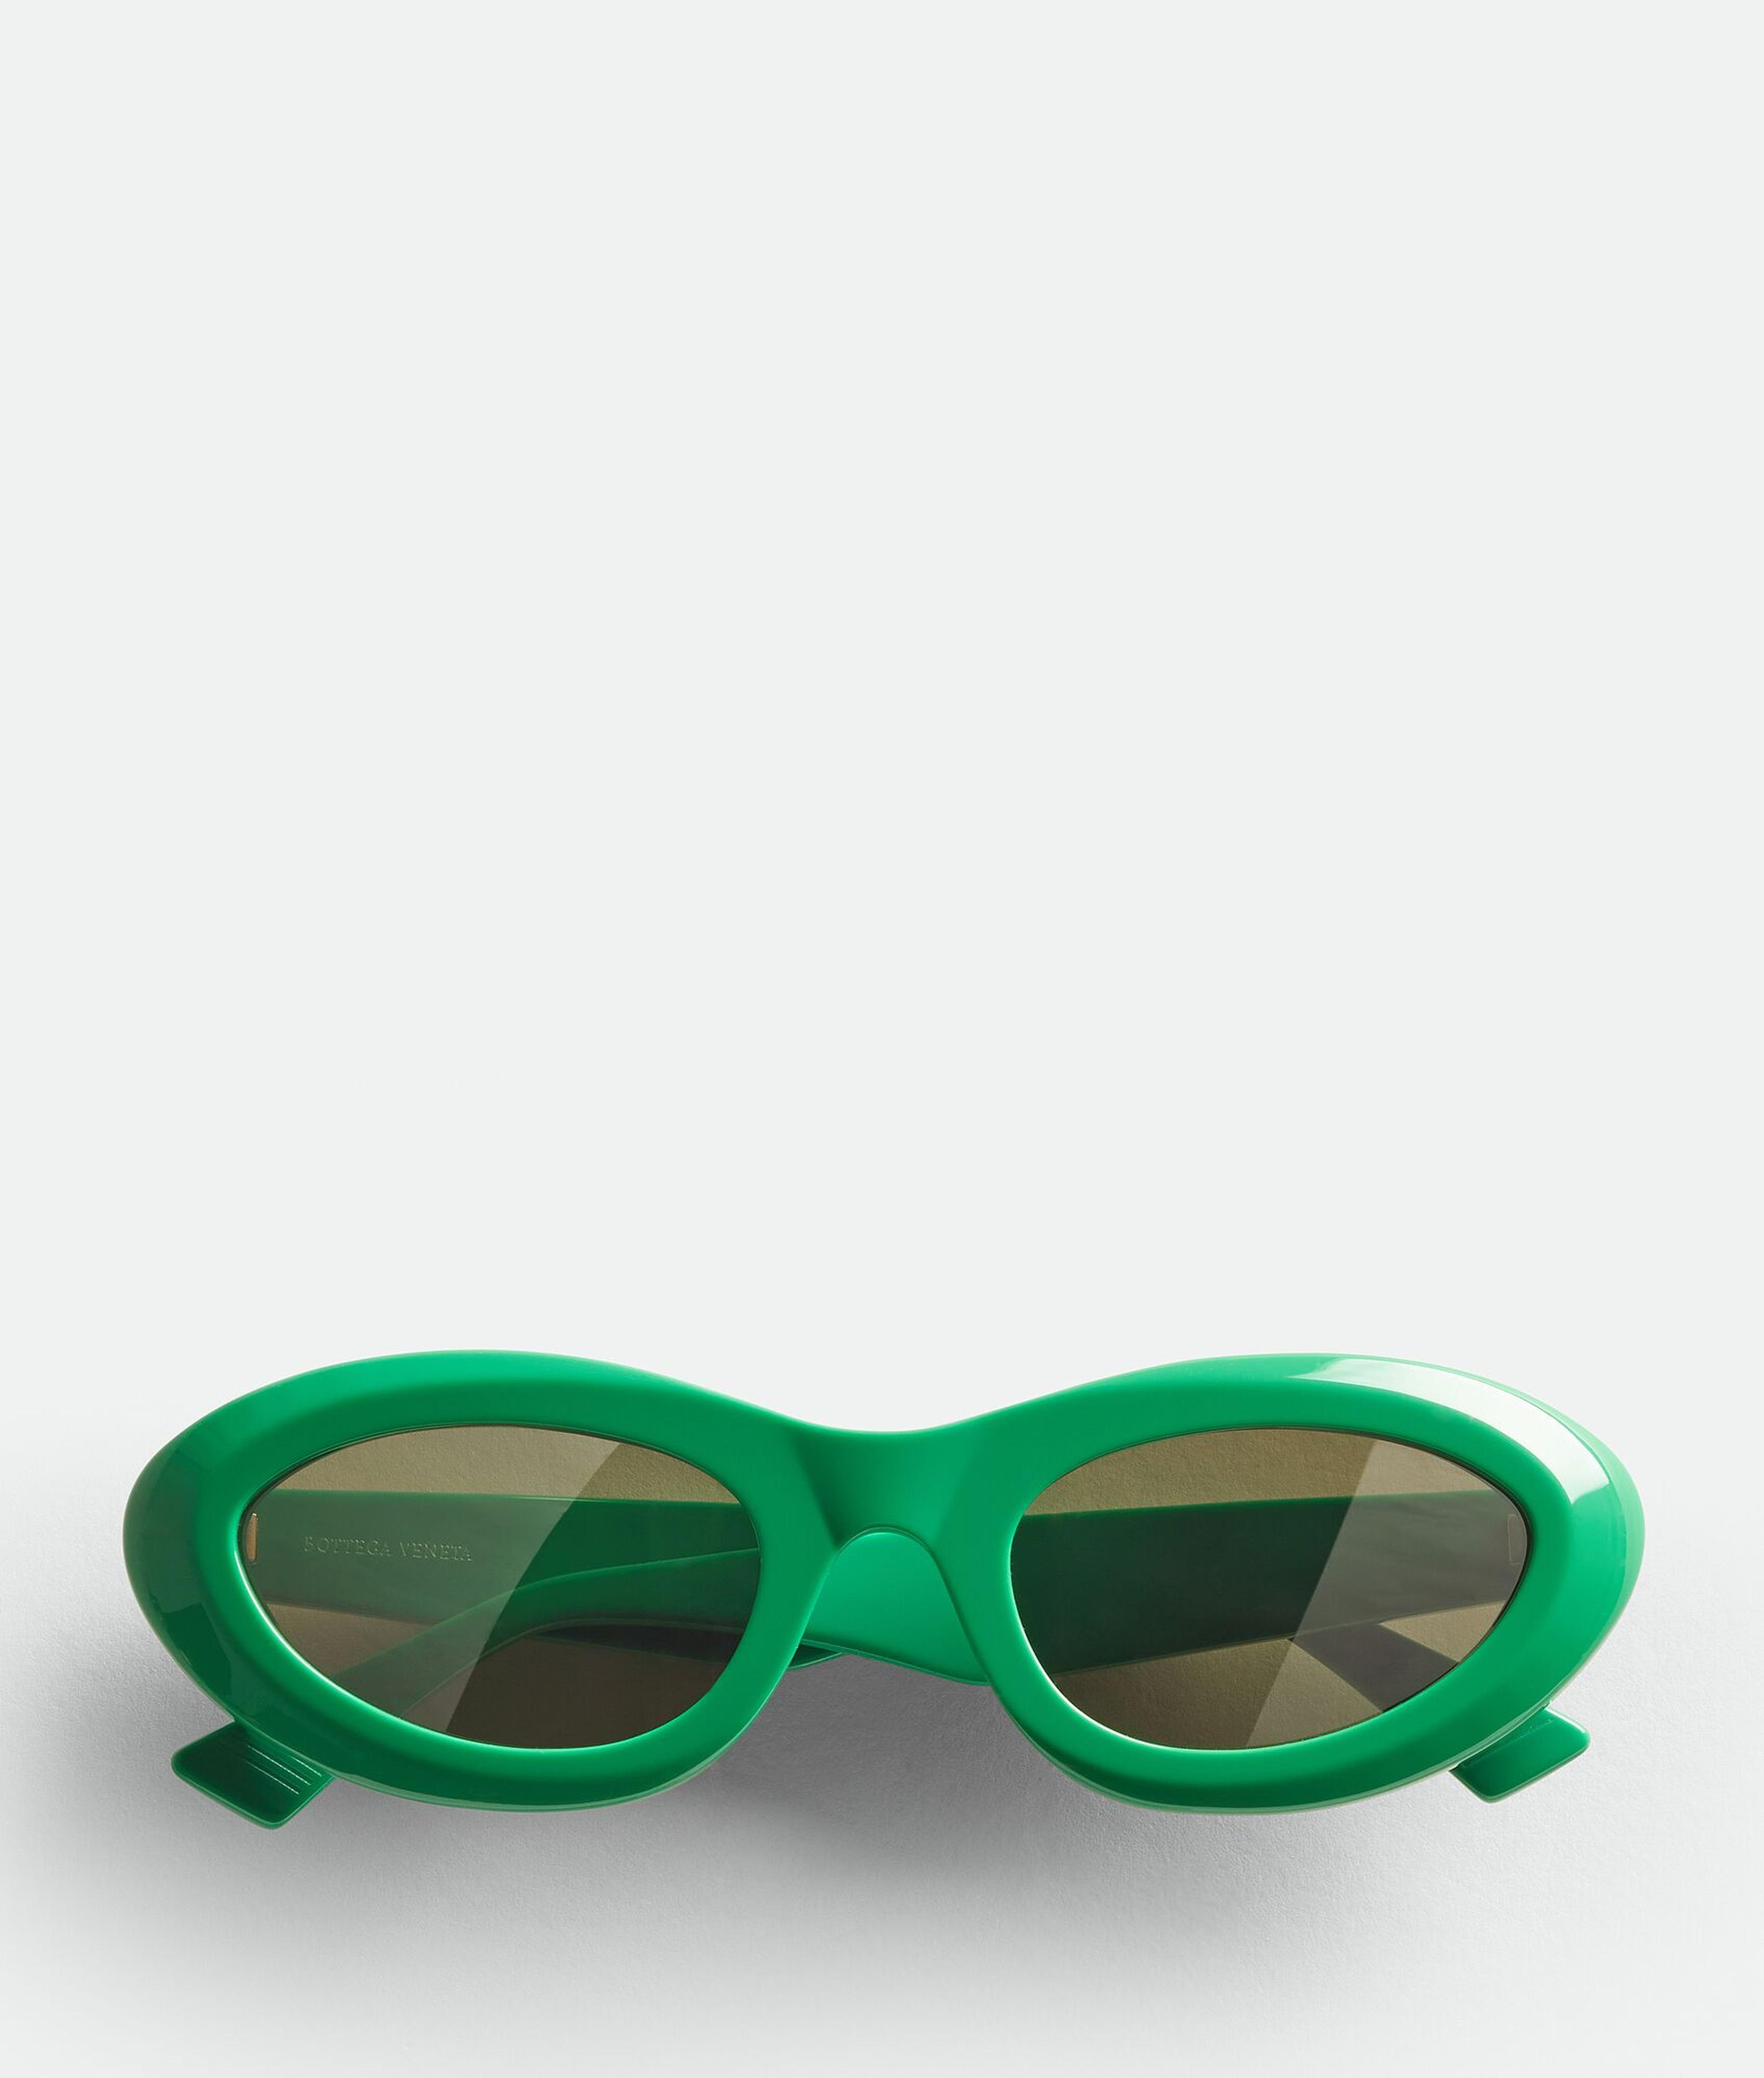 Bottega Veneta® Bombe Round Sunglasses in Green. Shop online now.